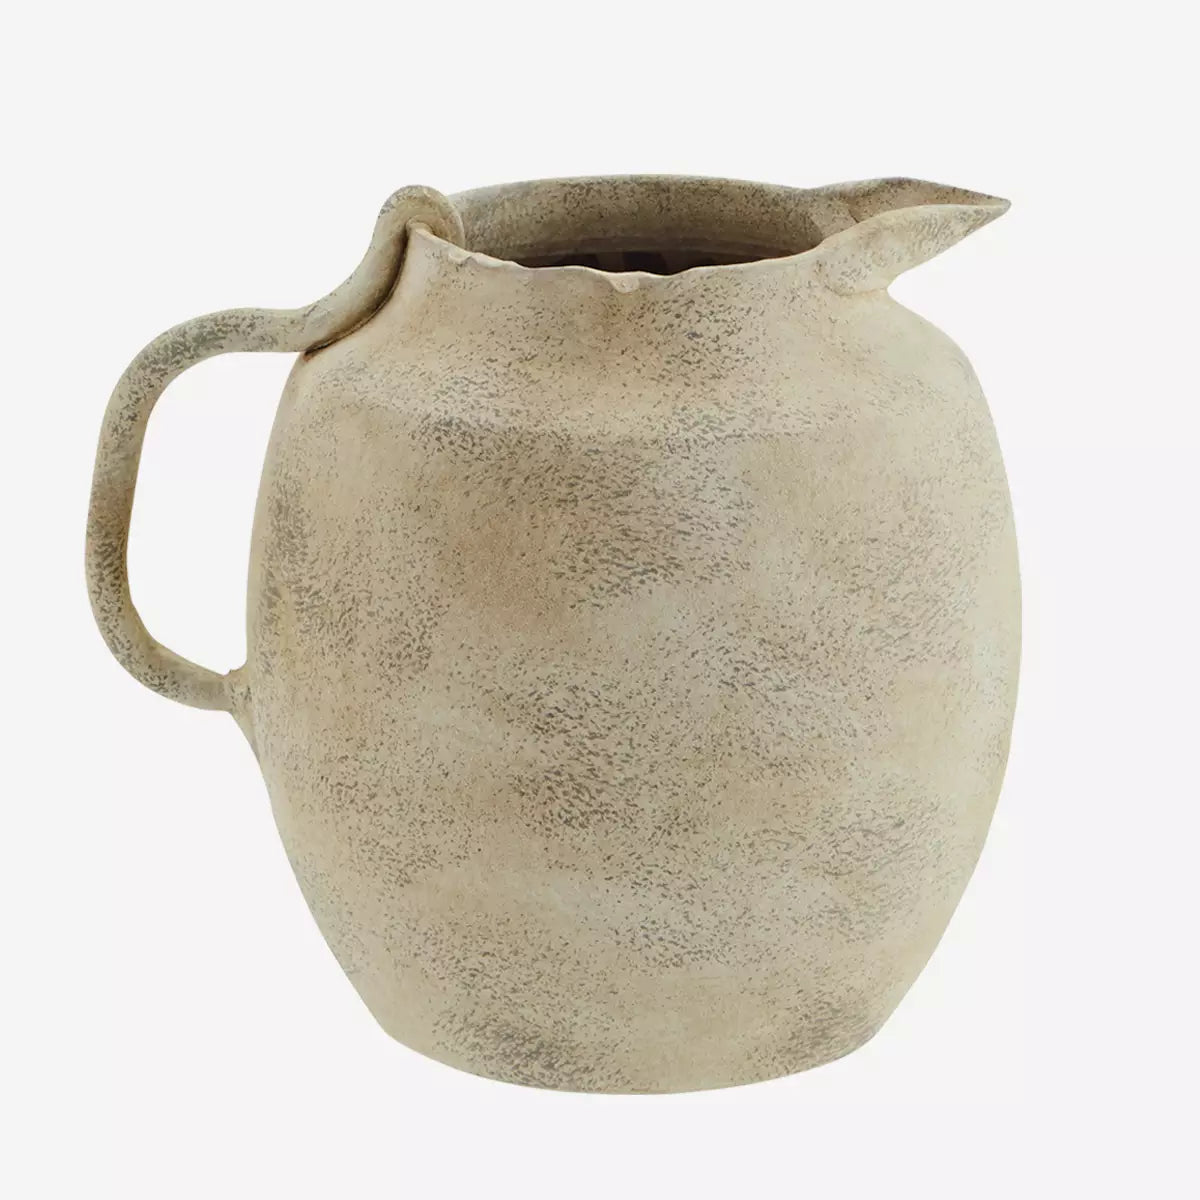 Terracotta vase with handle